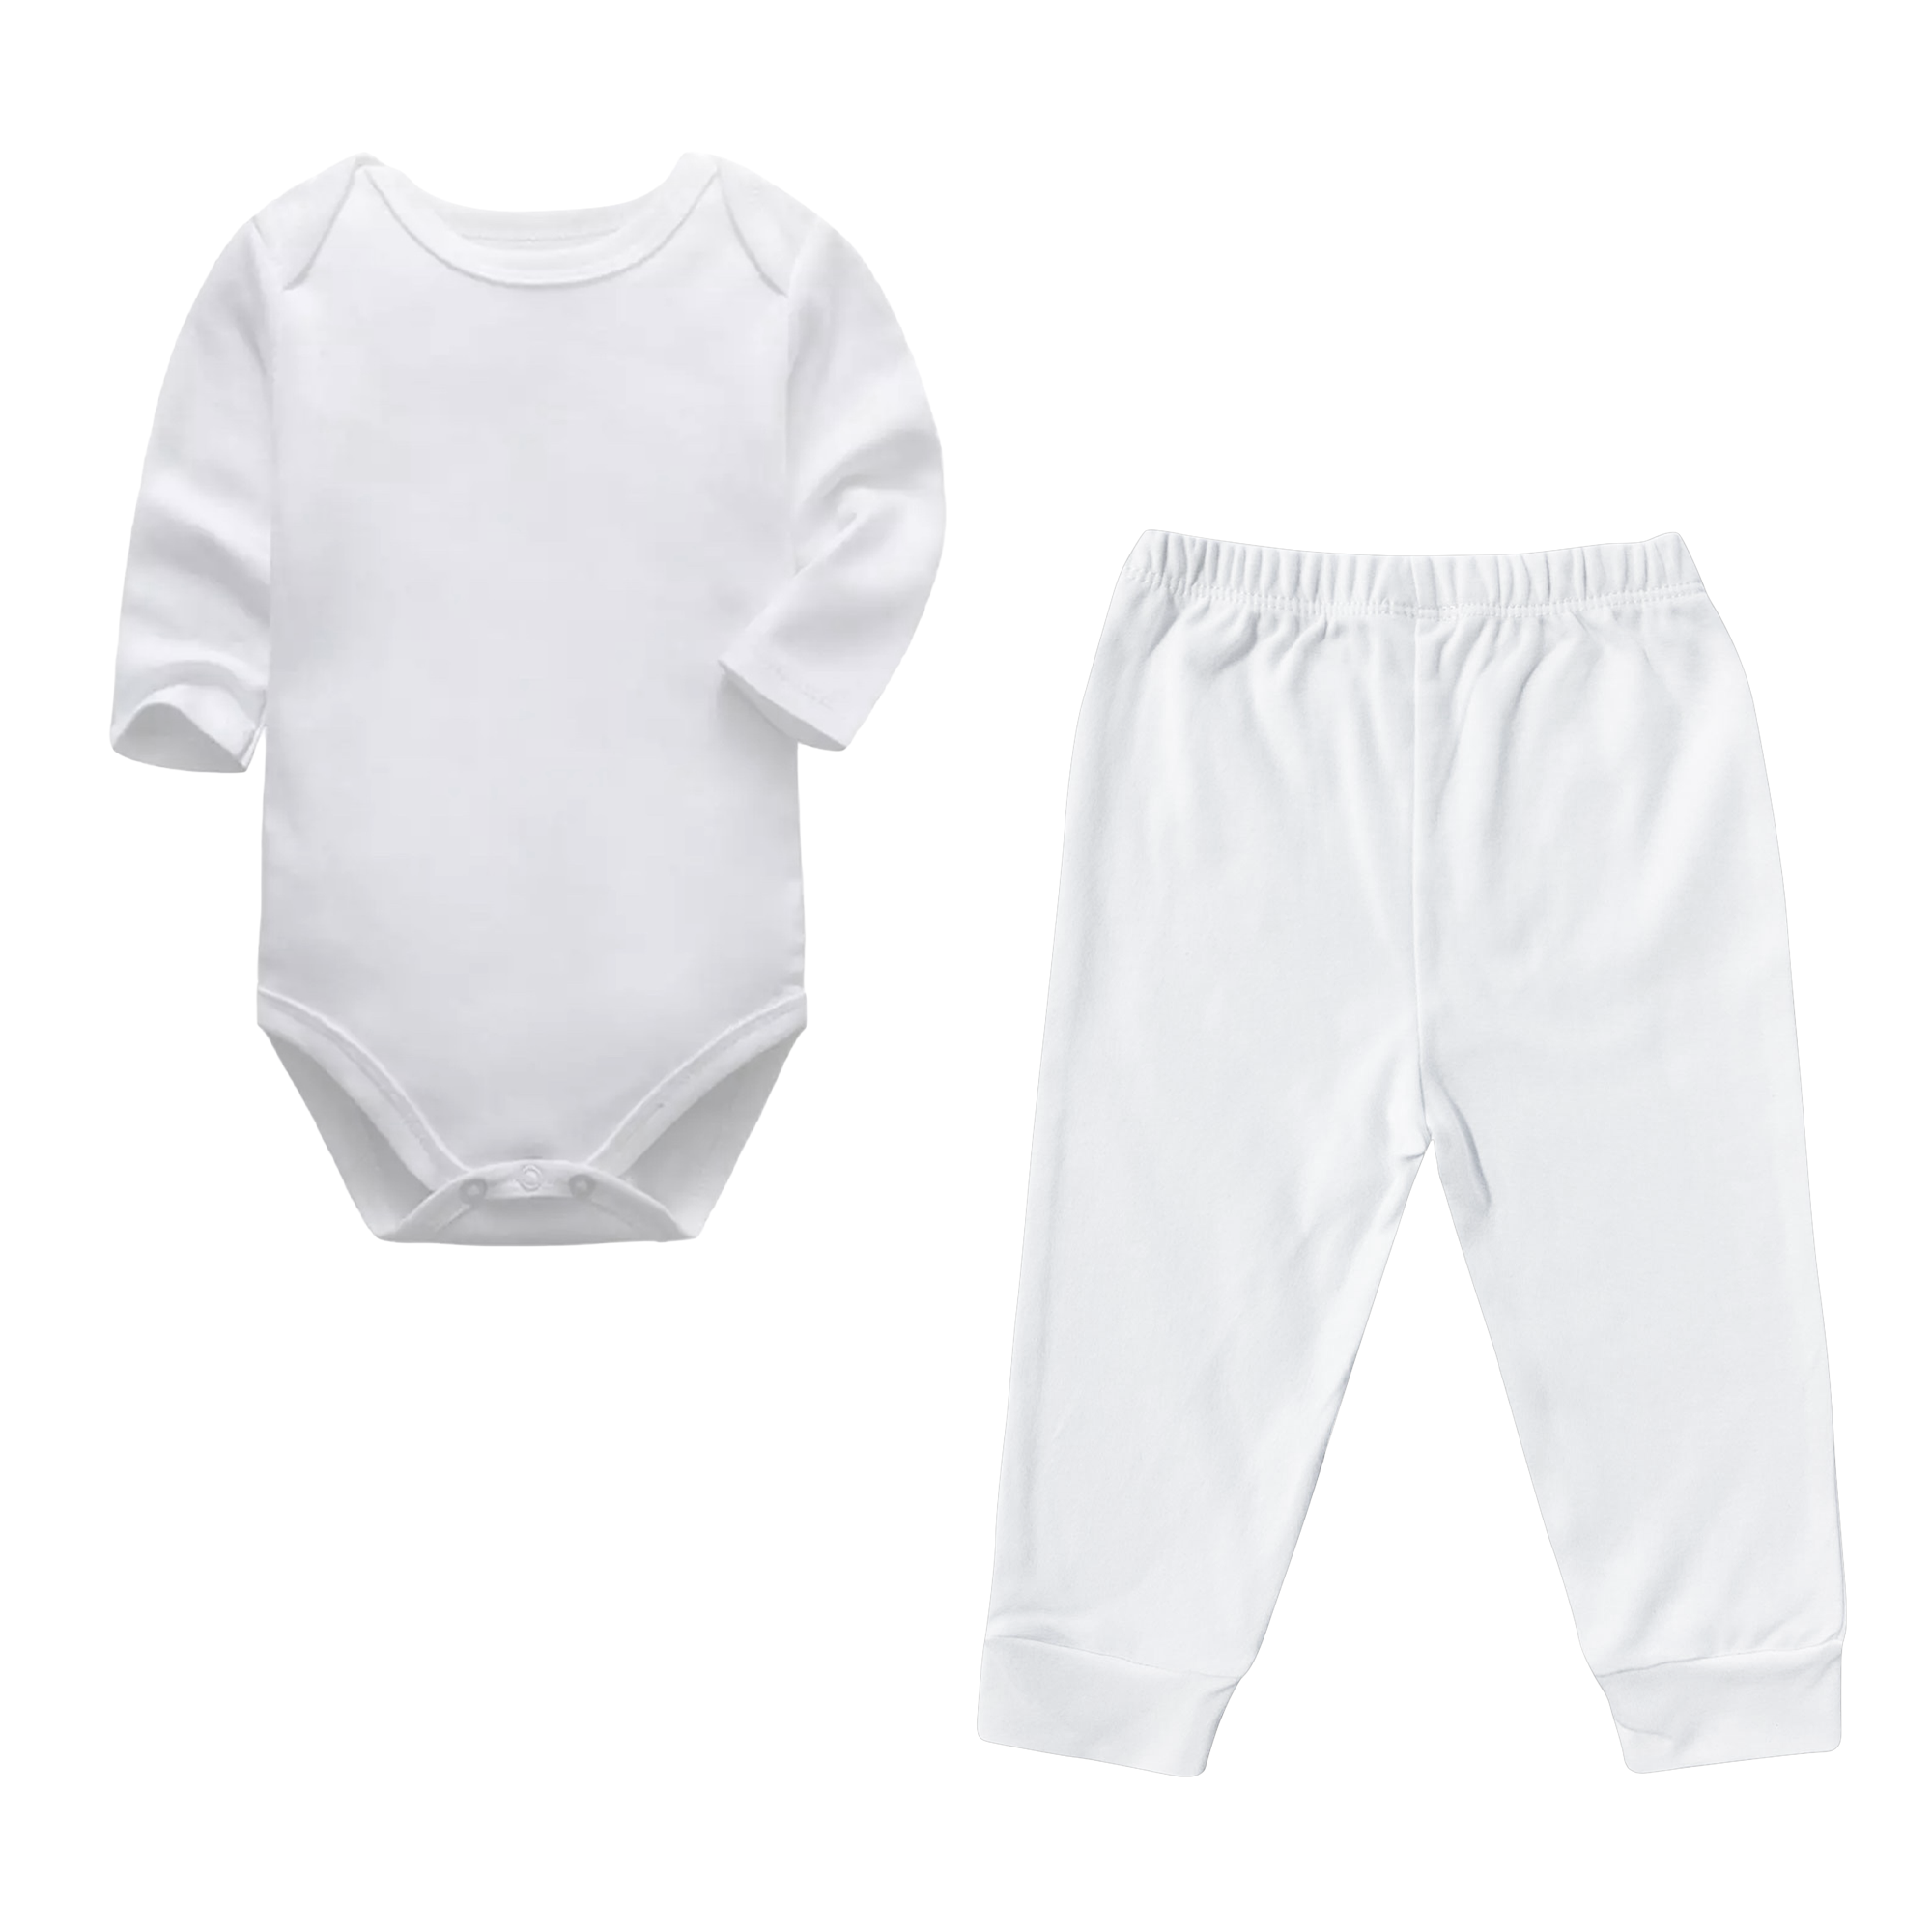 White Long Sleeved Baby Onesie & Pant Set